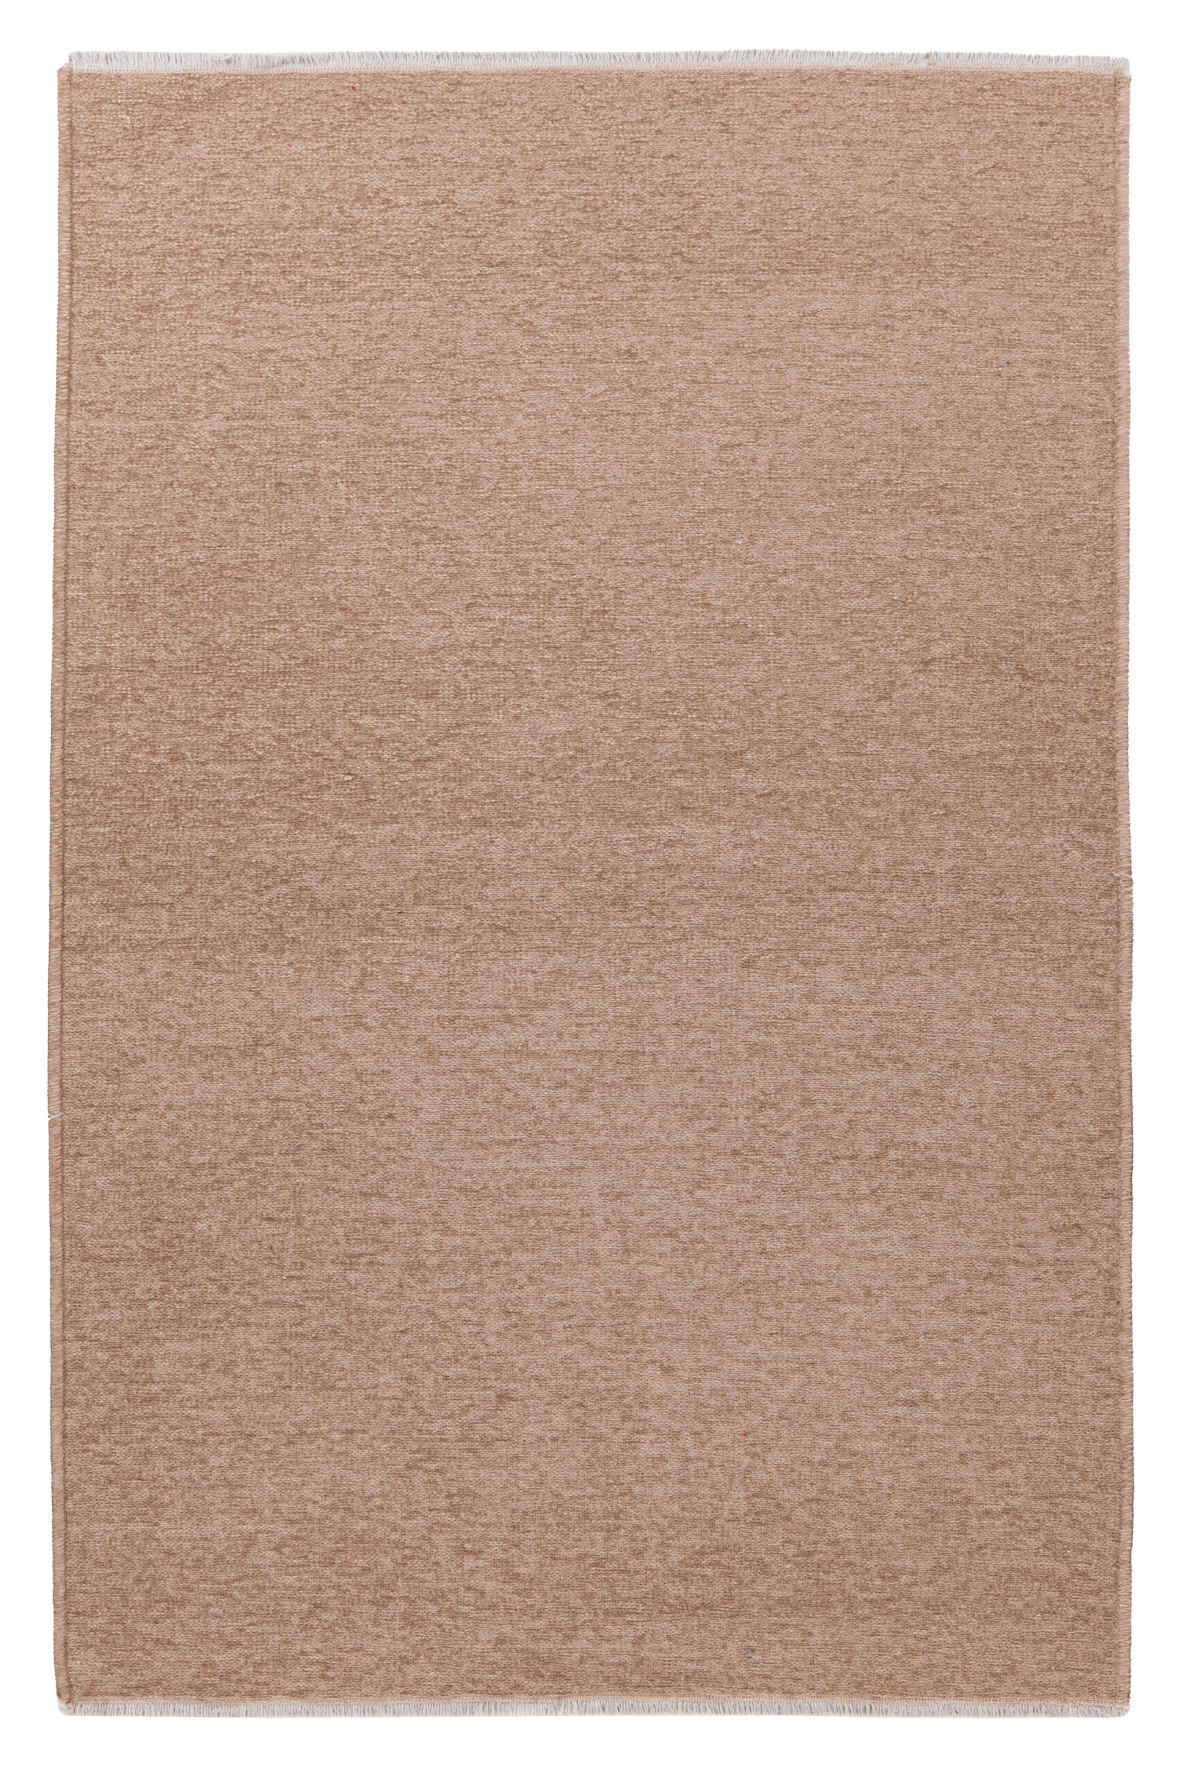 FLACHWEBETEPPICH 75/150 cm  - Sandfarben, Basics, Textil (75/150cm) - Novel